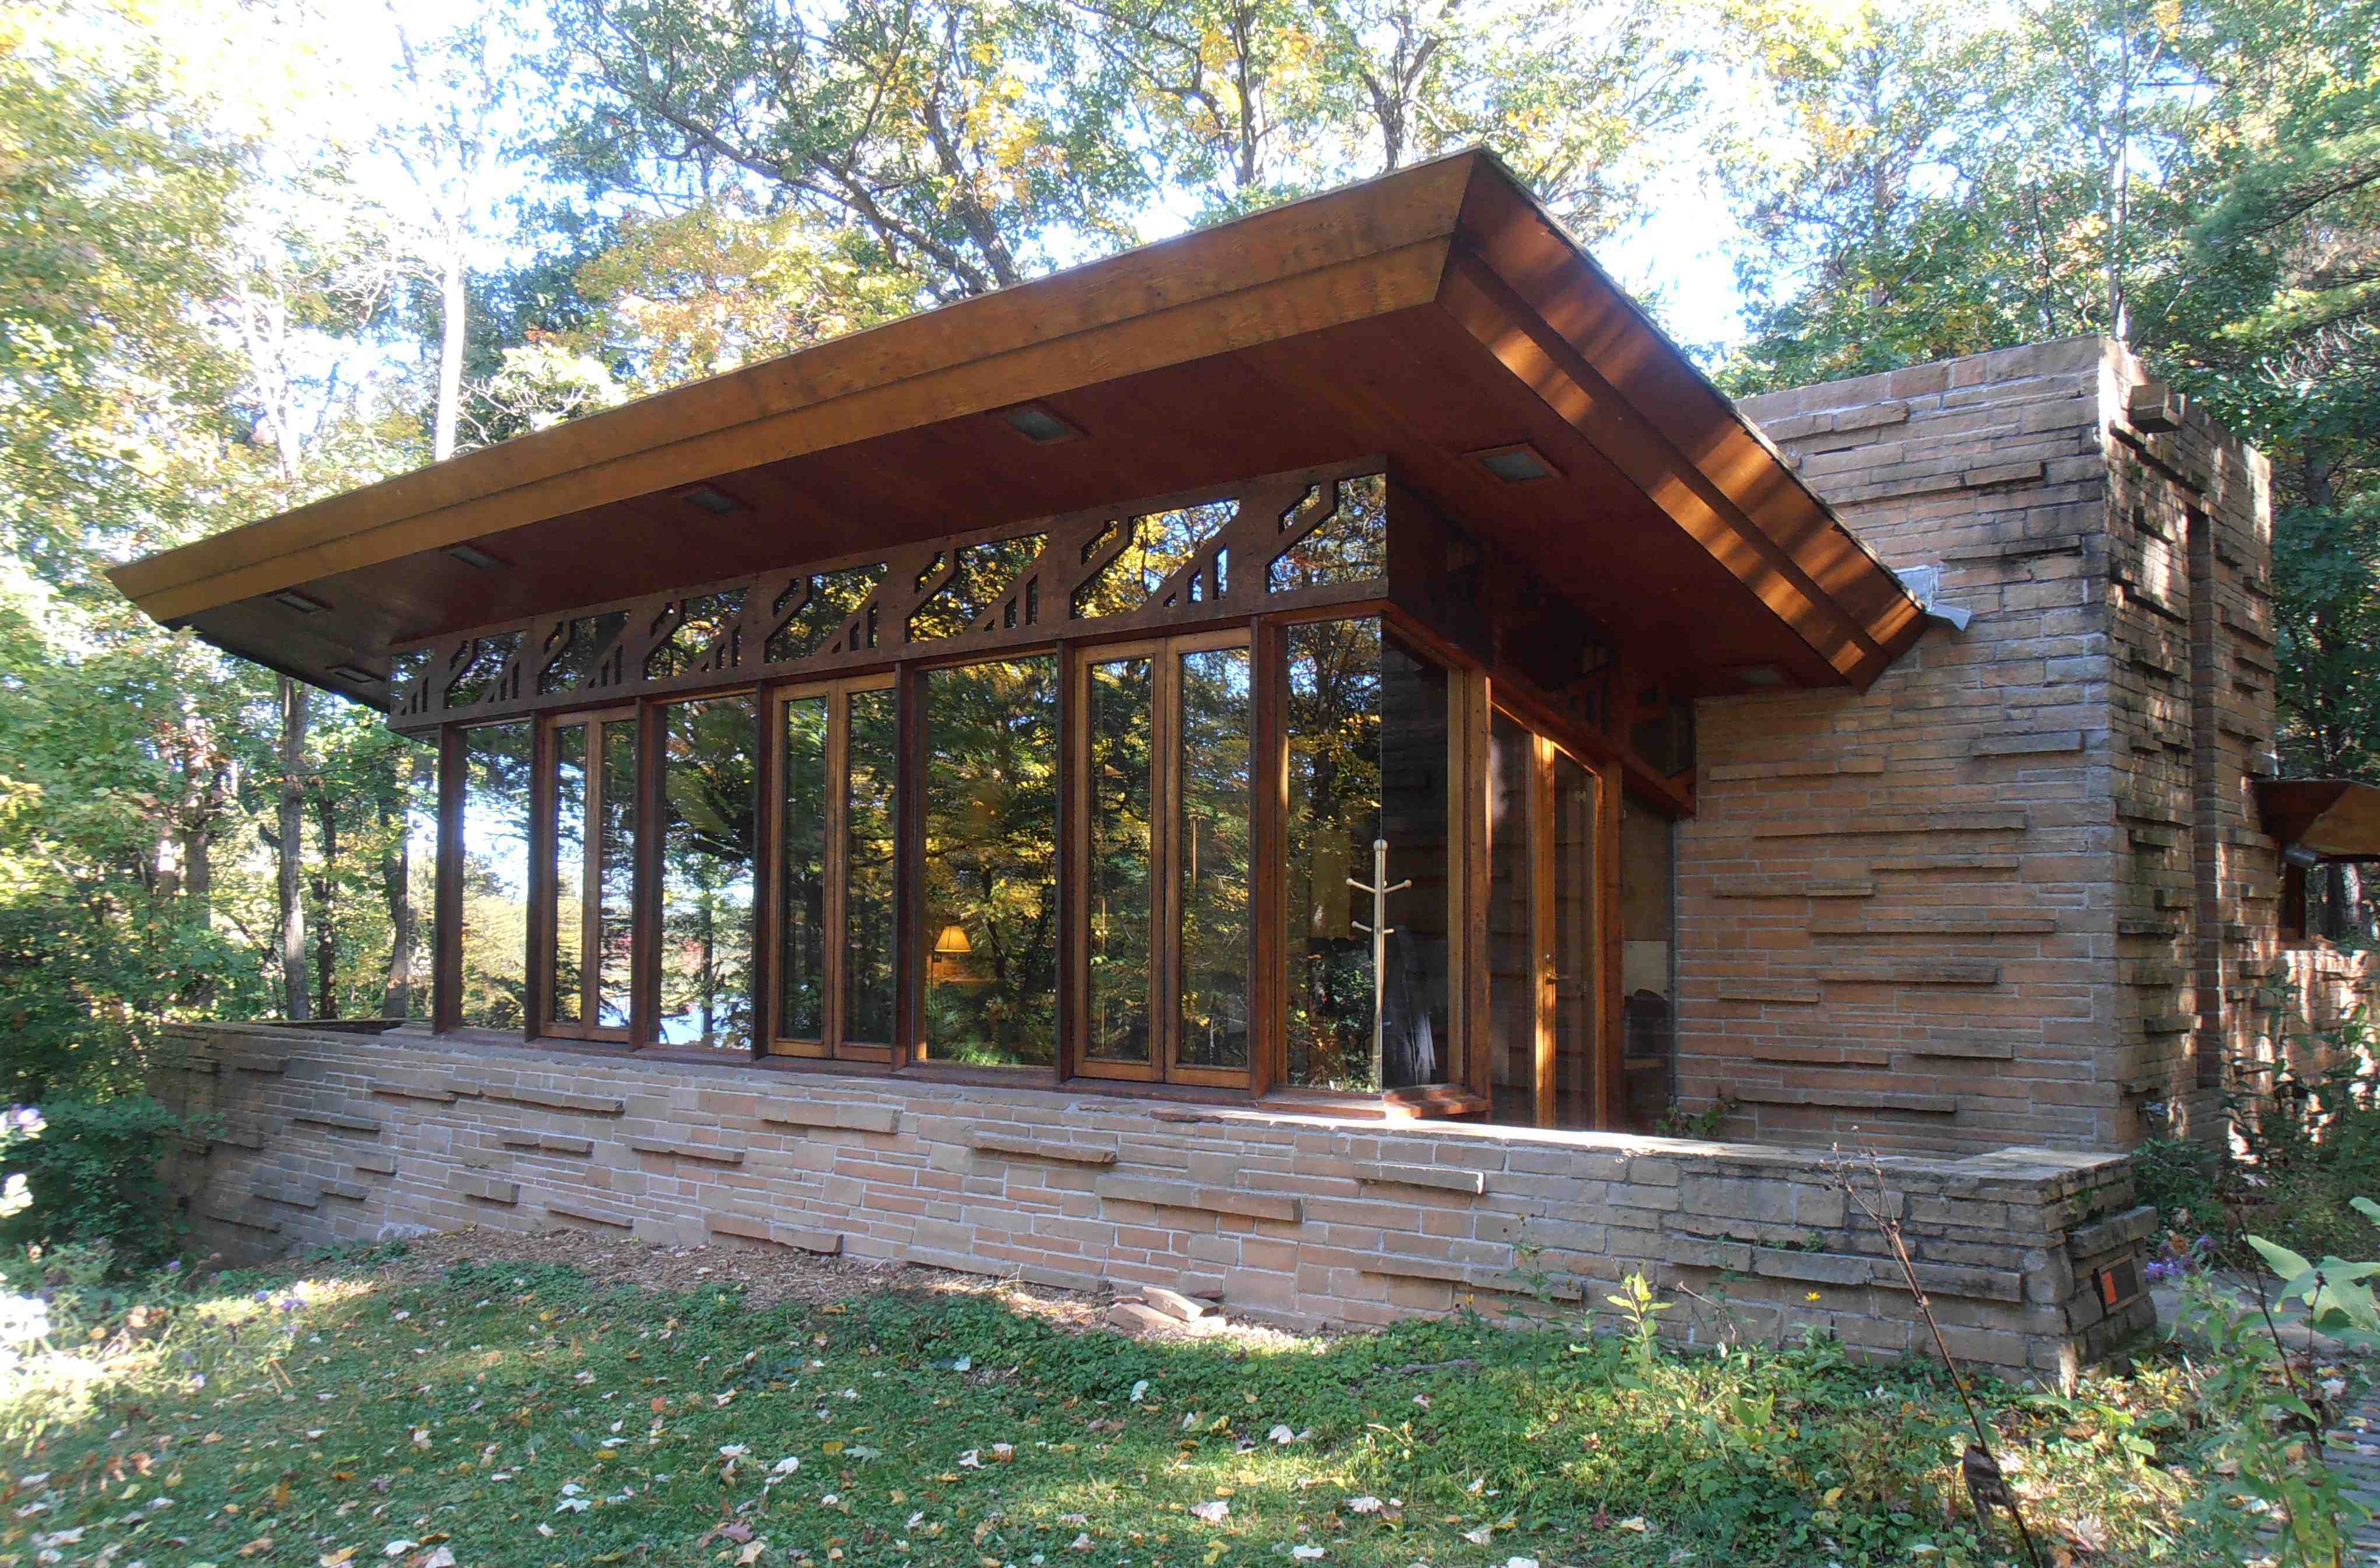 Frank Lloyd Wright’s Wisconsin Cottage